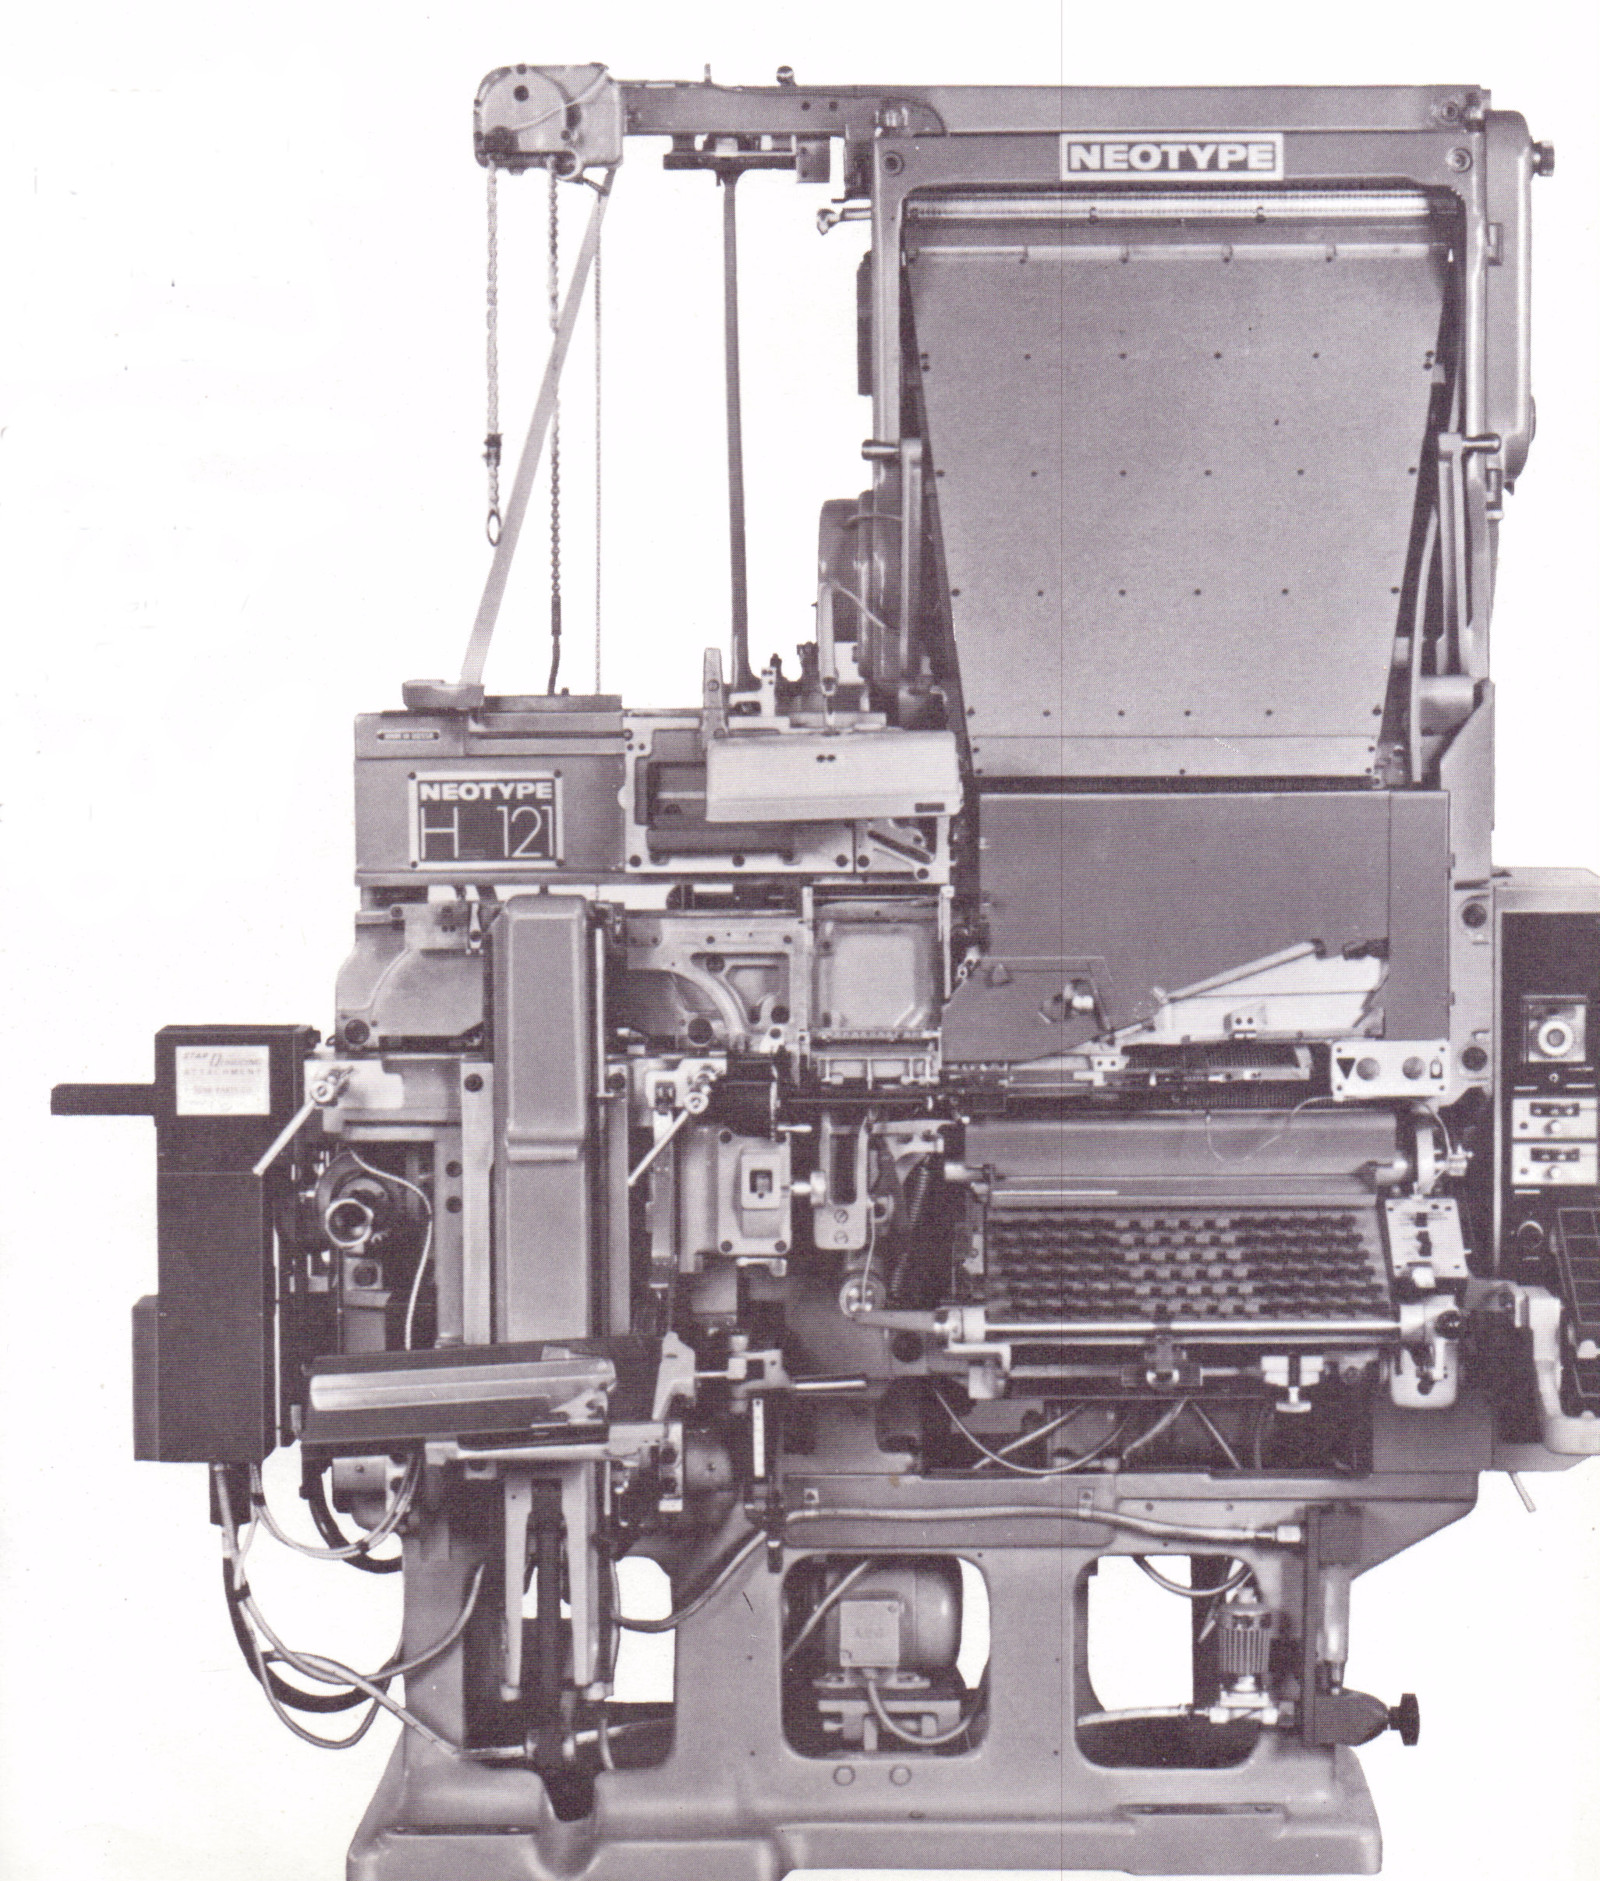 Neotype H121 Russian linecasting typesetting machine